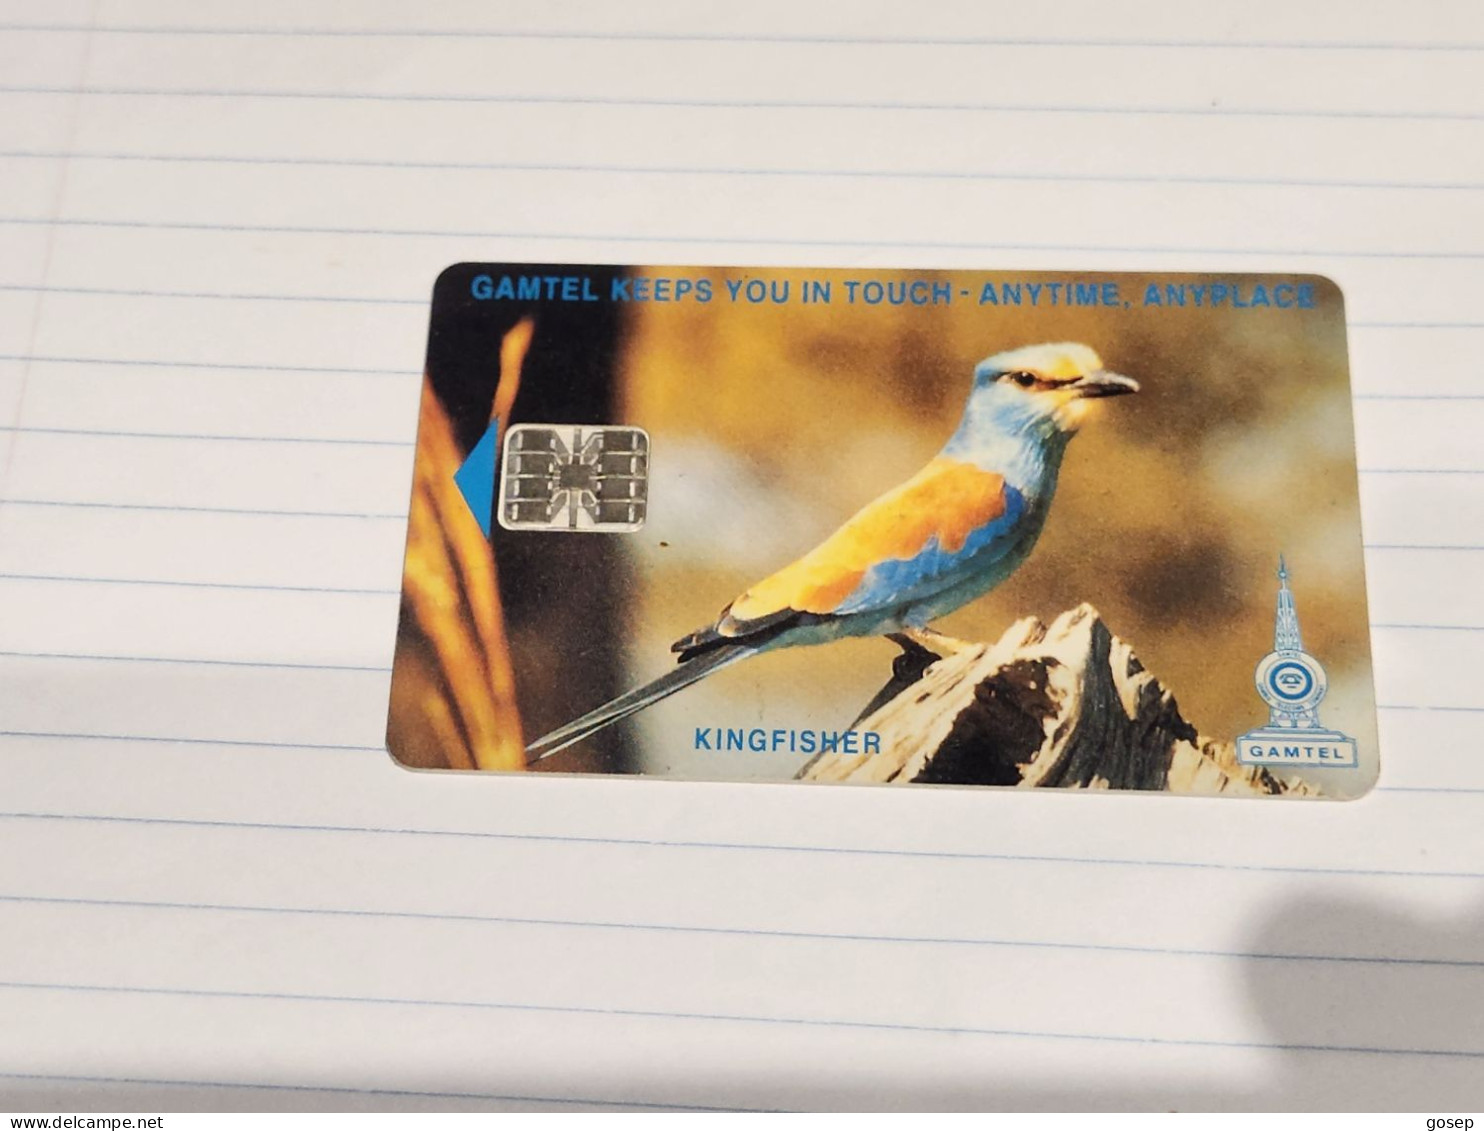 GAMBIA-(GAM-09)-Kingfisher (CN:C4Cxxxxxx)-(8)-(125units)-(C4C148066)-used Card+1card Prepiad Free - Gambie